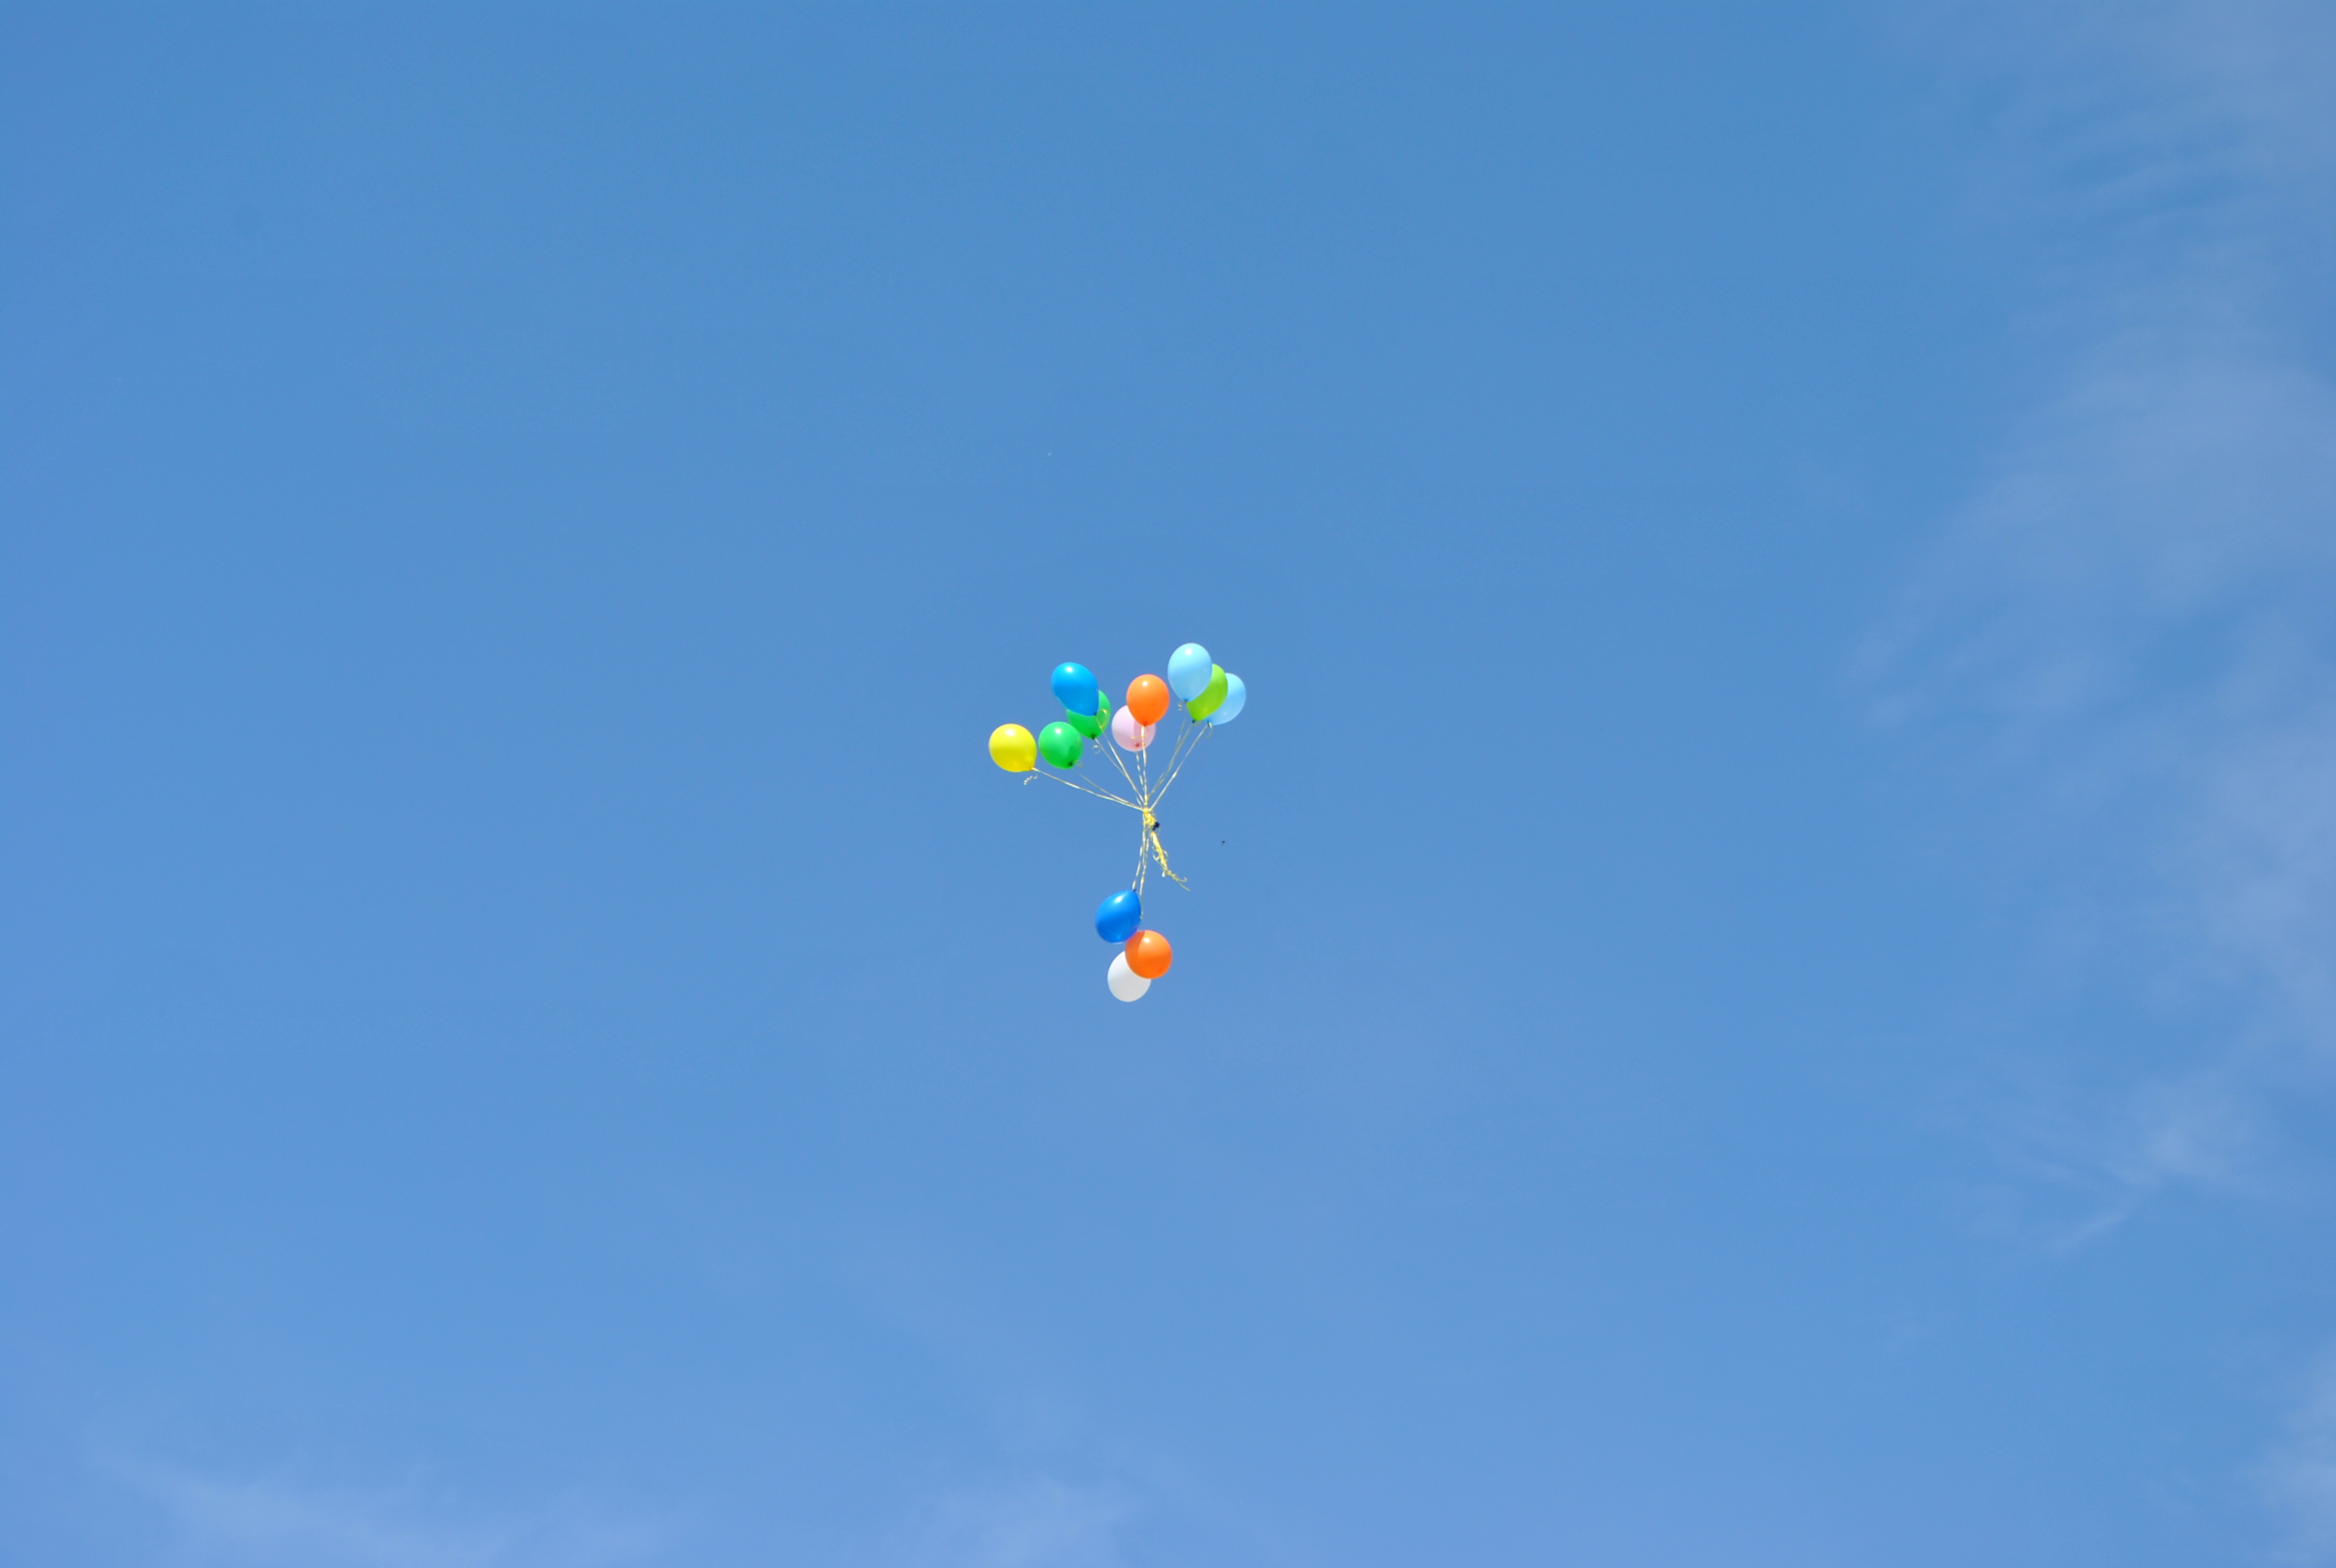 Sky Blu Helium Bubble. Helium Floating Art.